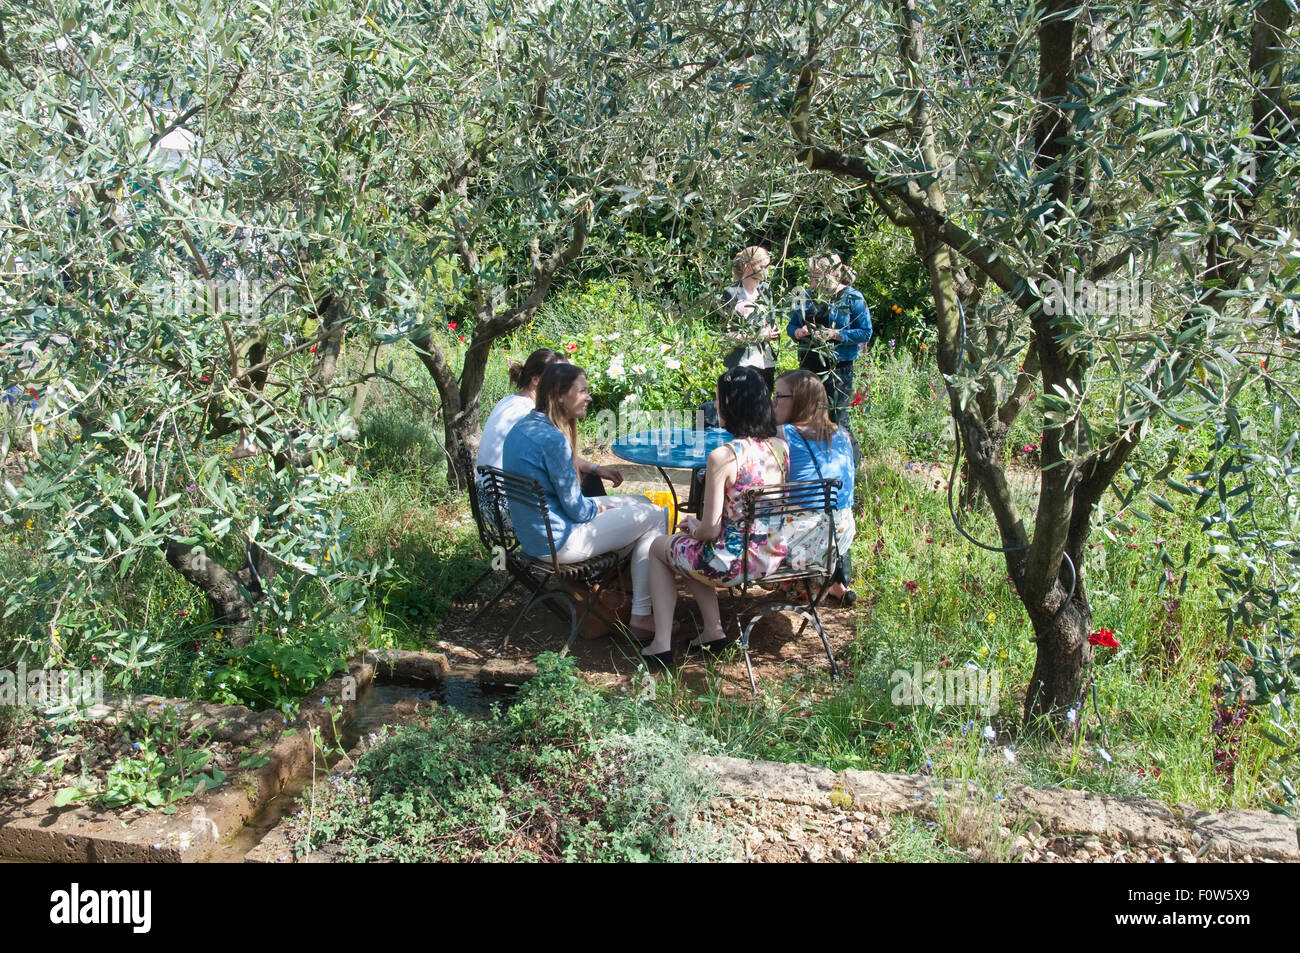 Perfumer S Garden L Occitane En Provence An Olive Grove With